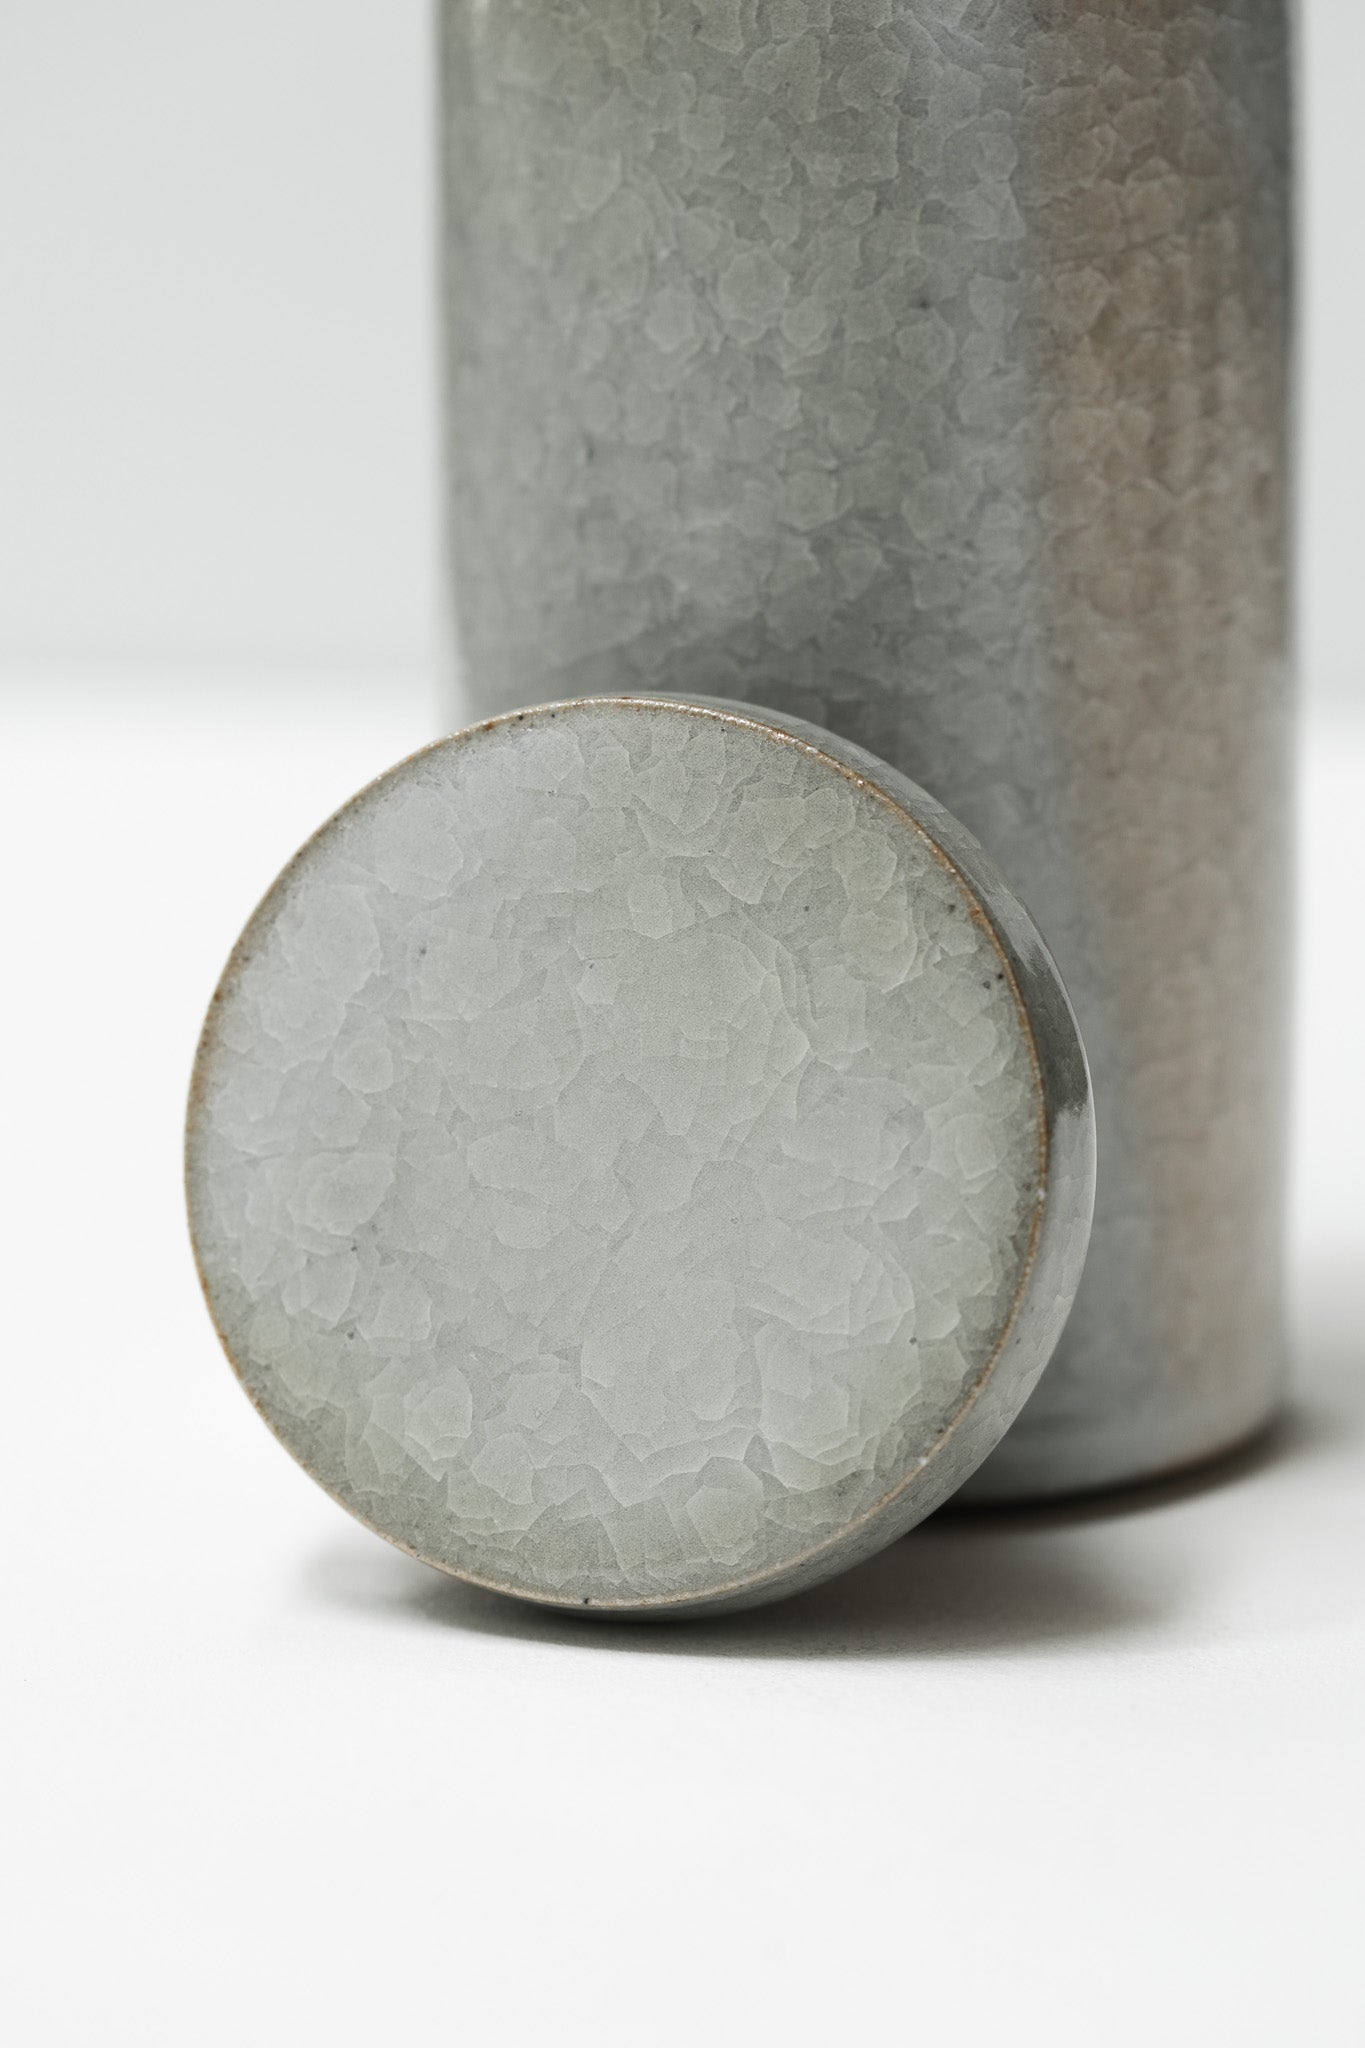 Florian Gadsby: Lidded Jar